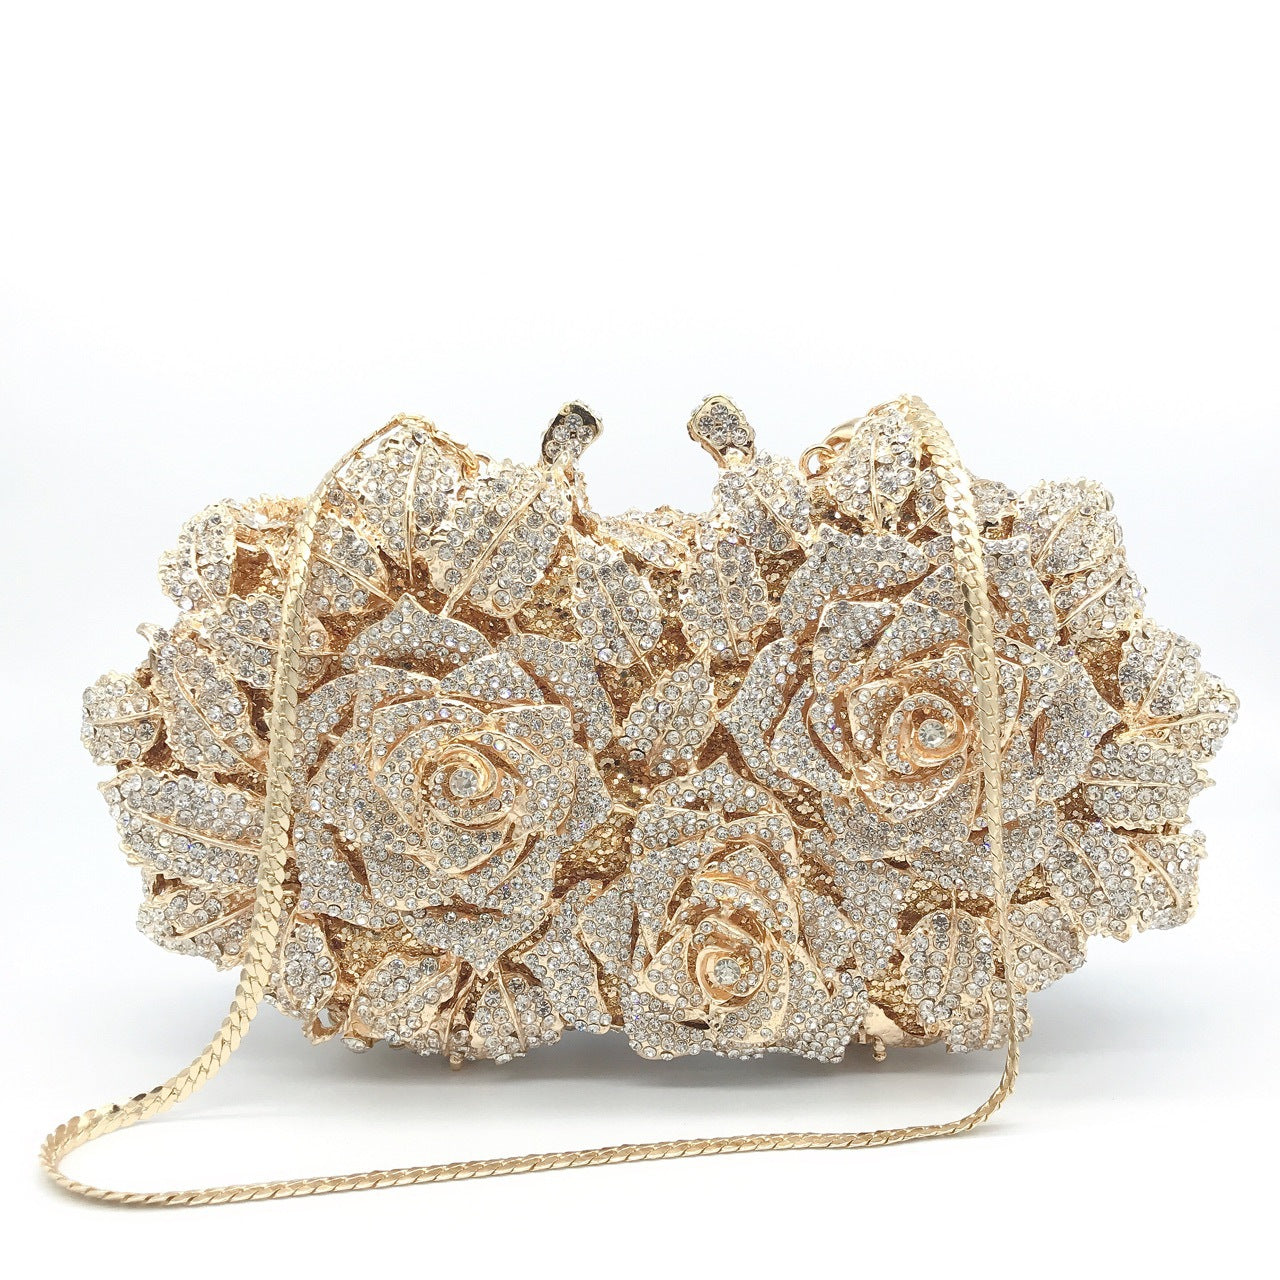 3 Flowers Shape Bridal Purse, Gold/Silver Wedding Clutch, Luxury Gift For Bride